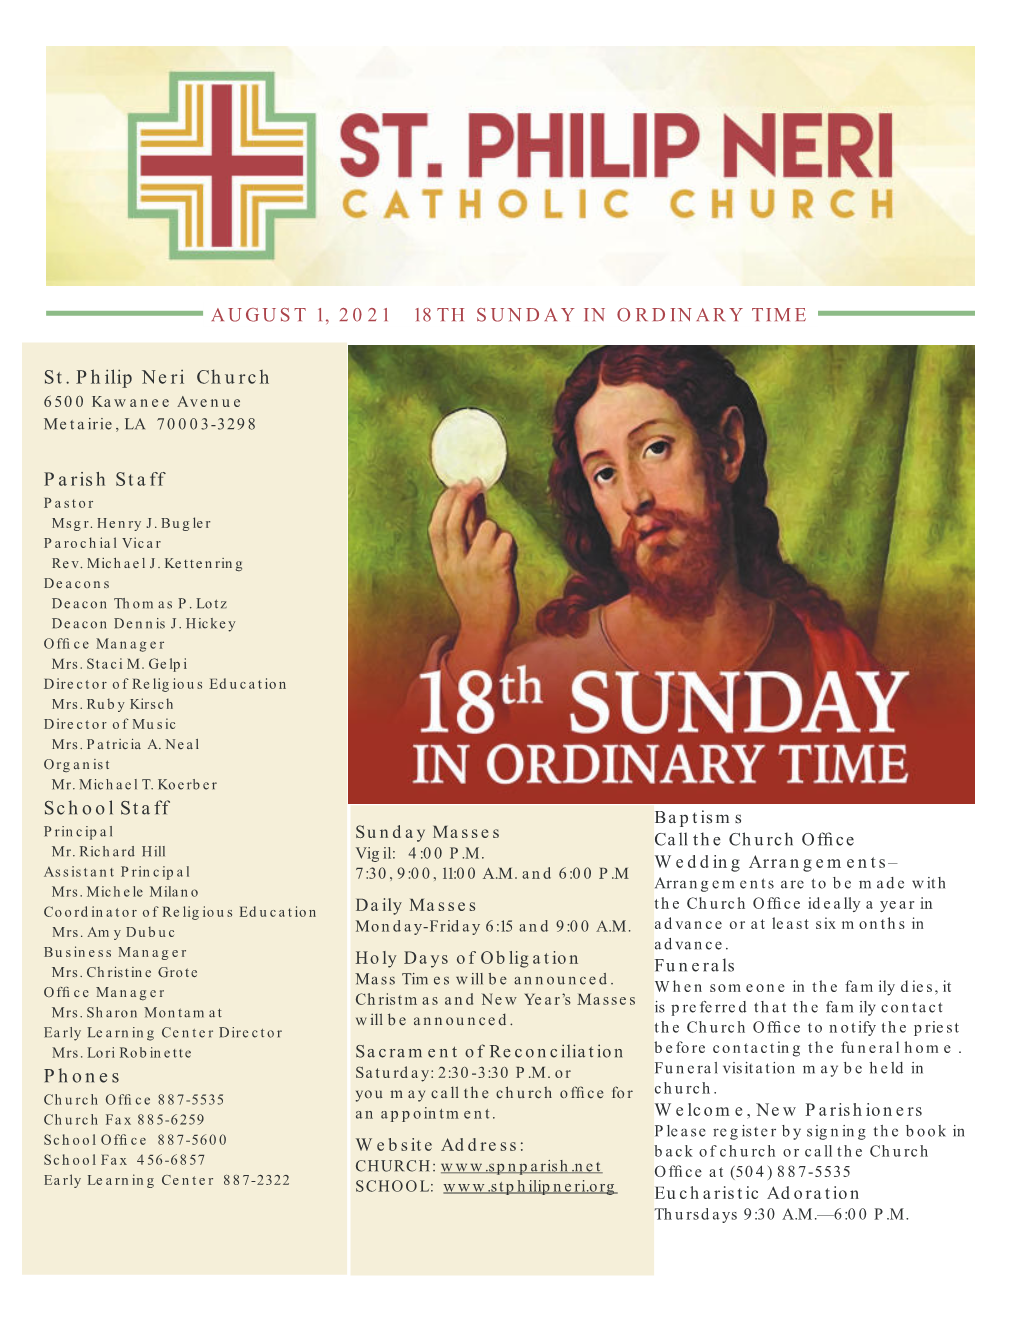 St. Philip Neri Church Parish Staff School Staff Phones AUGUST 1